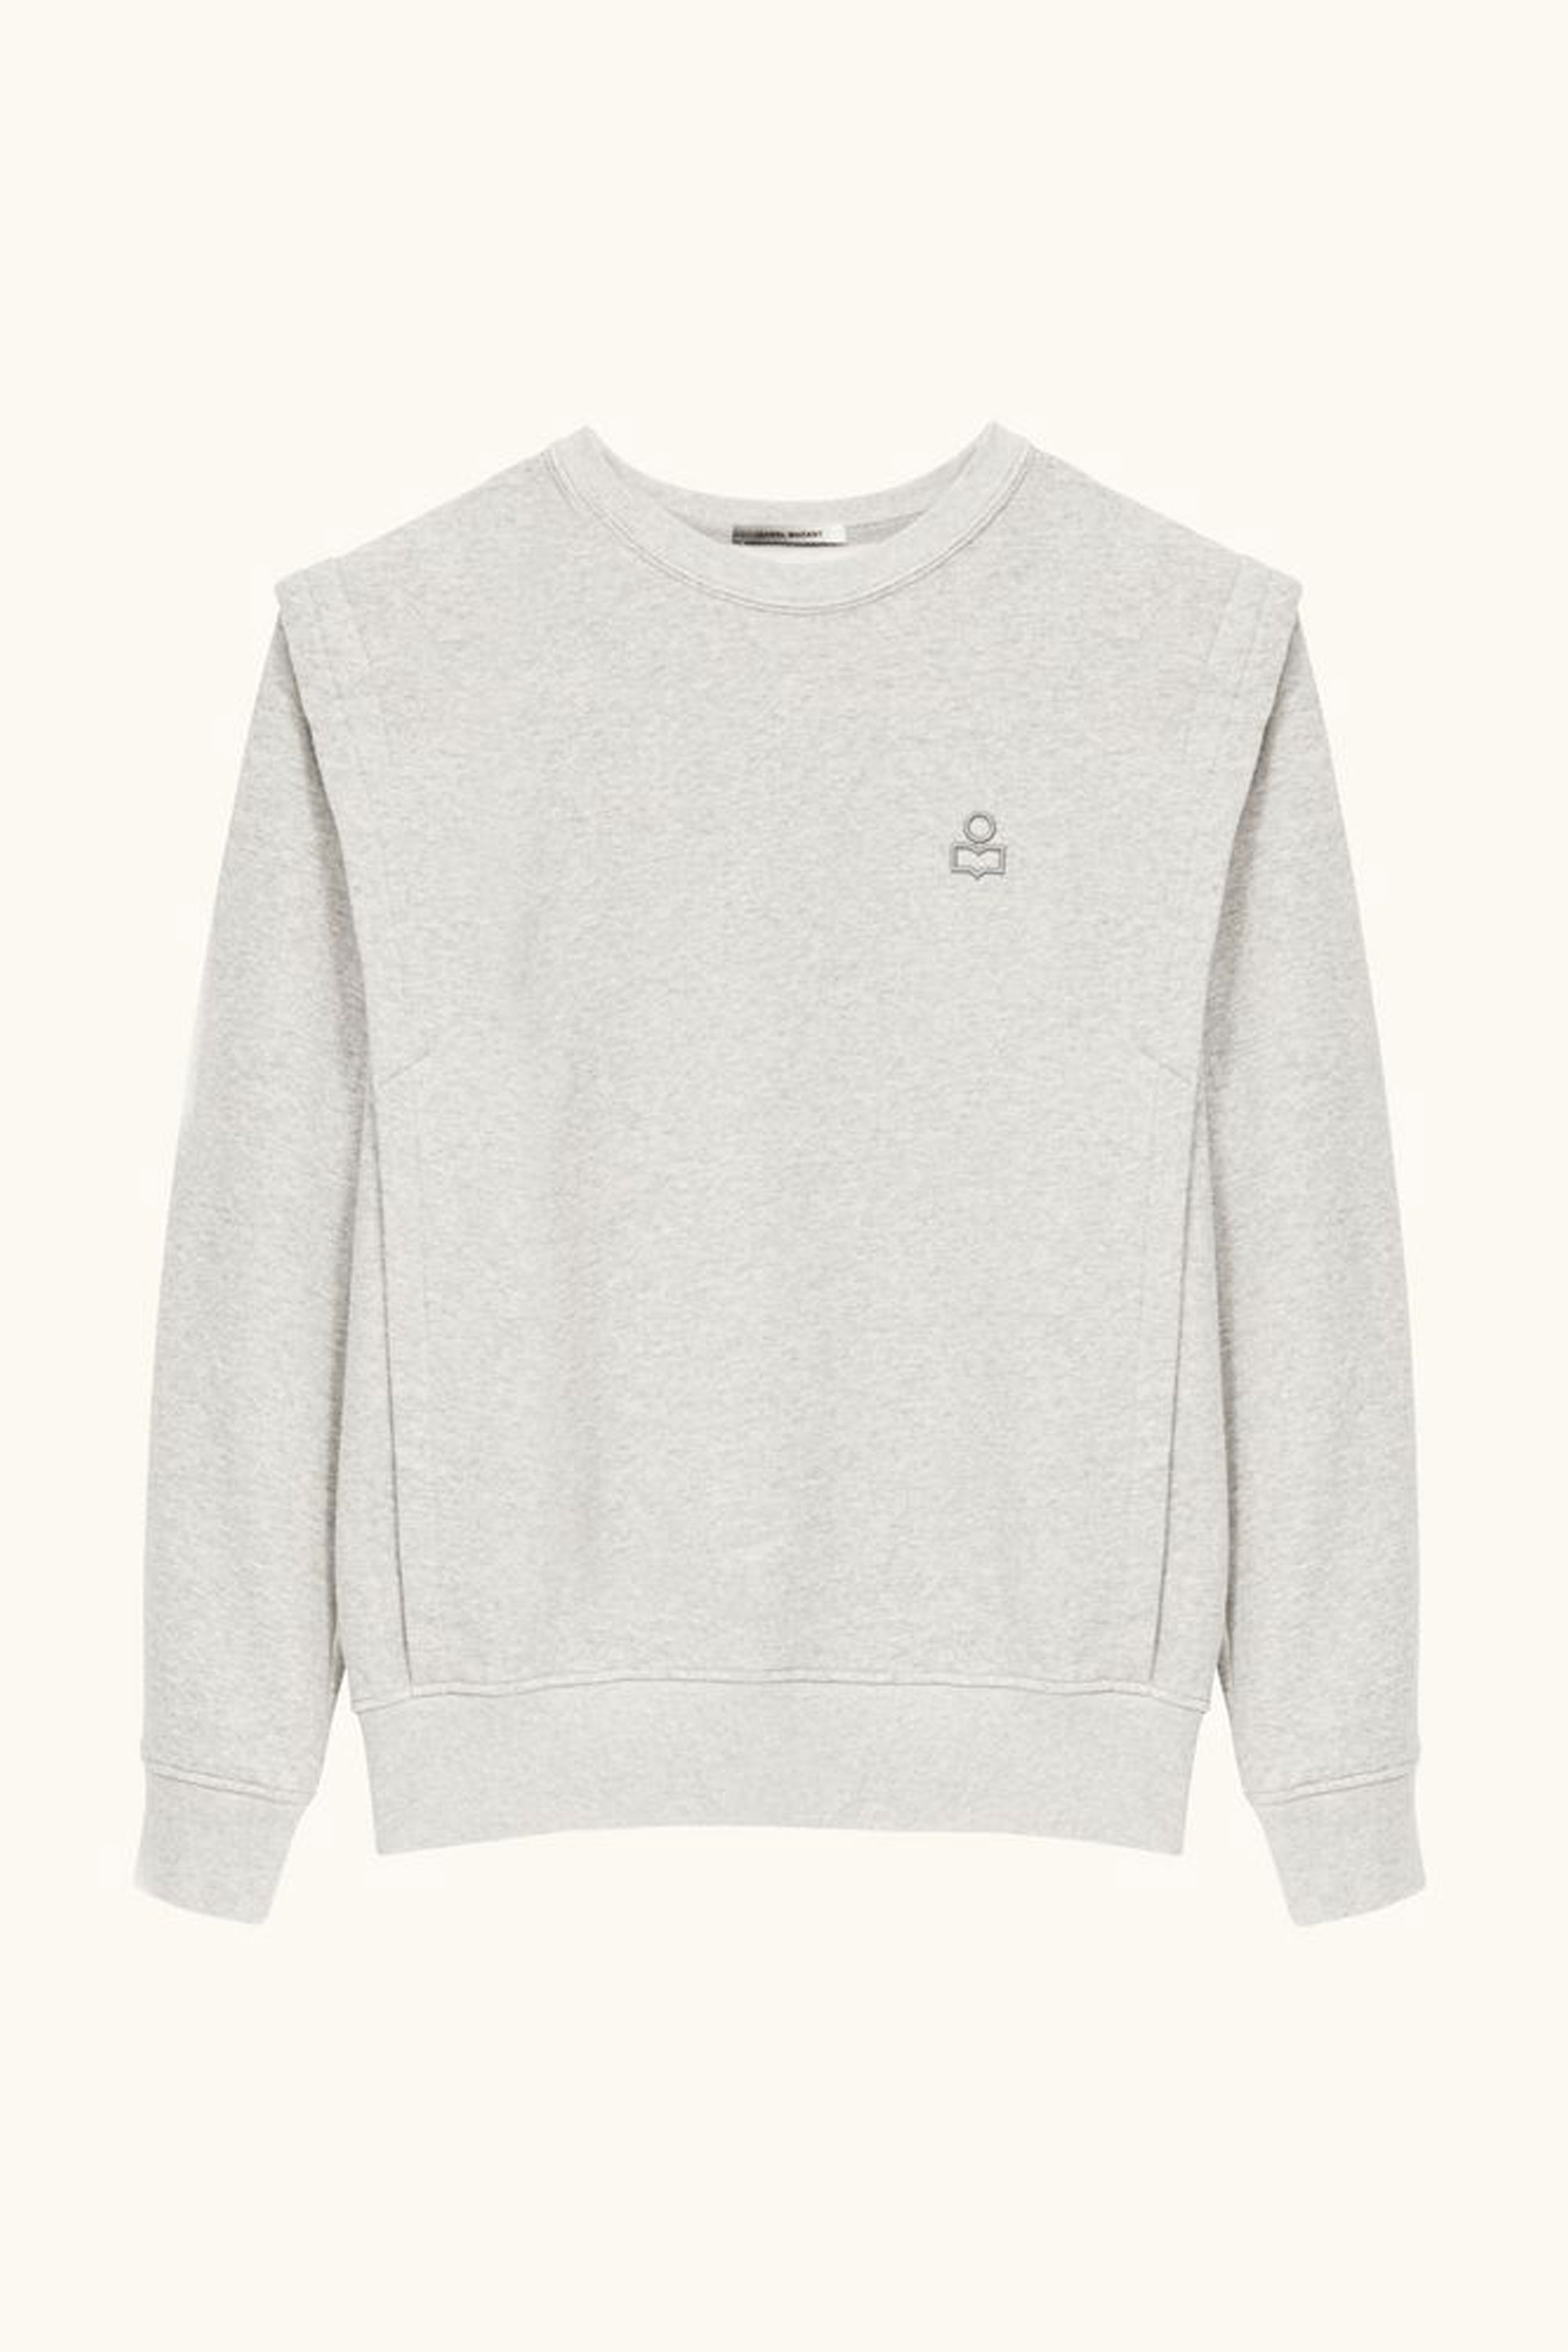 I.Marant MIBBER Sweat shirts  2 corlor (Grey &amp; Faded Black)  발매전 게시글 예약시 5%할인쿠폰 증정